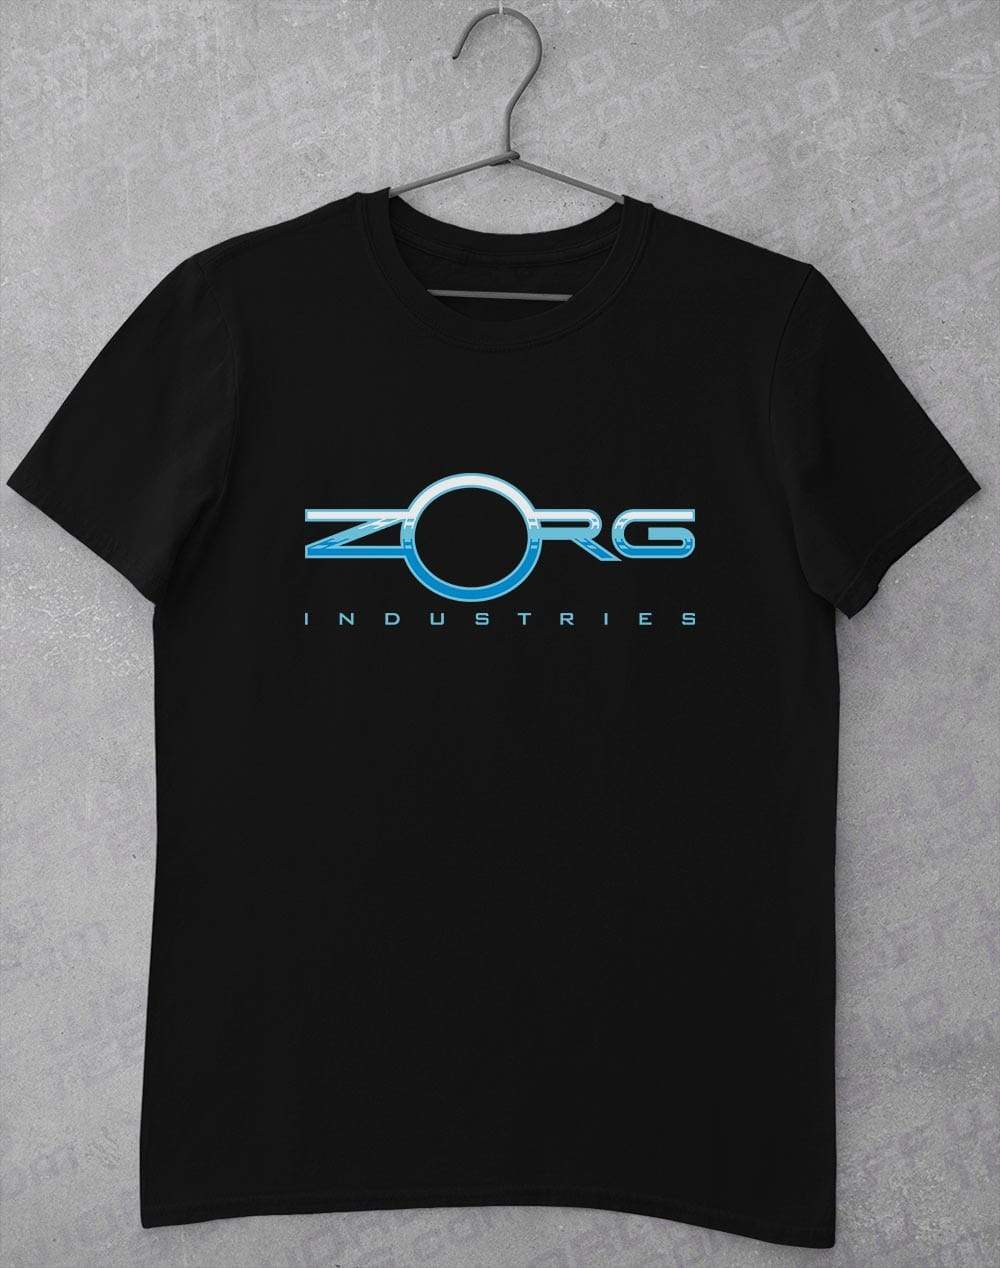 Zorg Industries T-Shirt S / Black  - Off World Tees